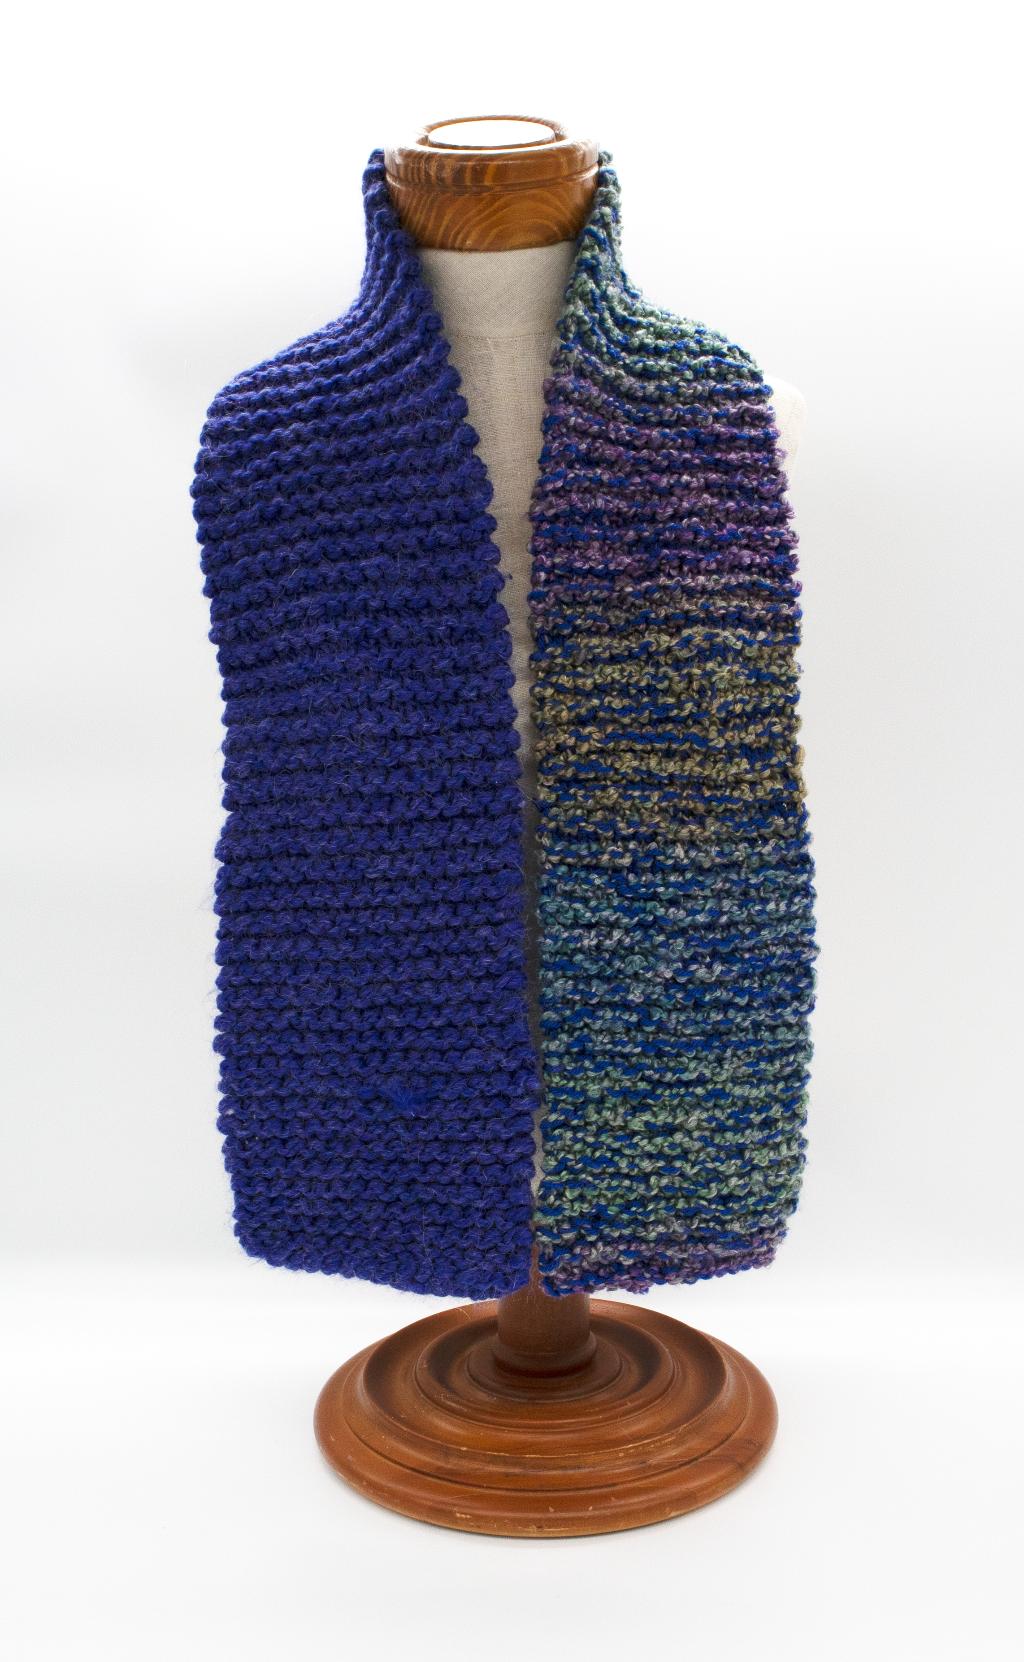 ''Pretty Purples'' scarf by June Hegedus